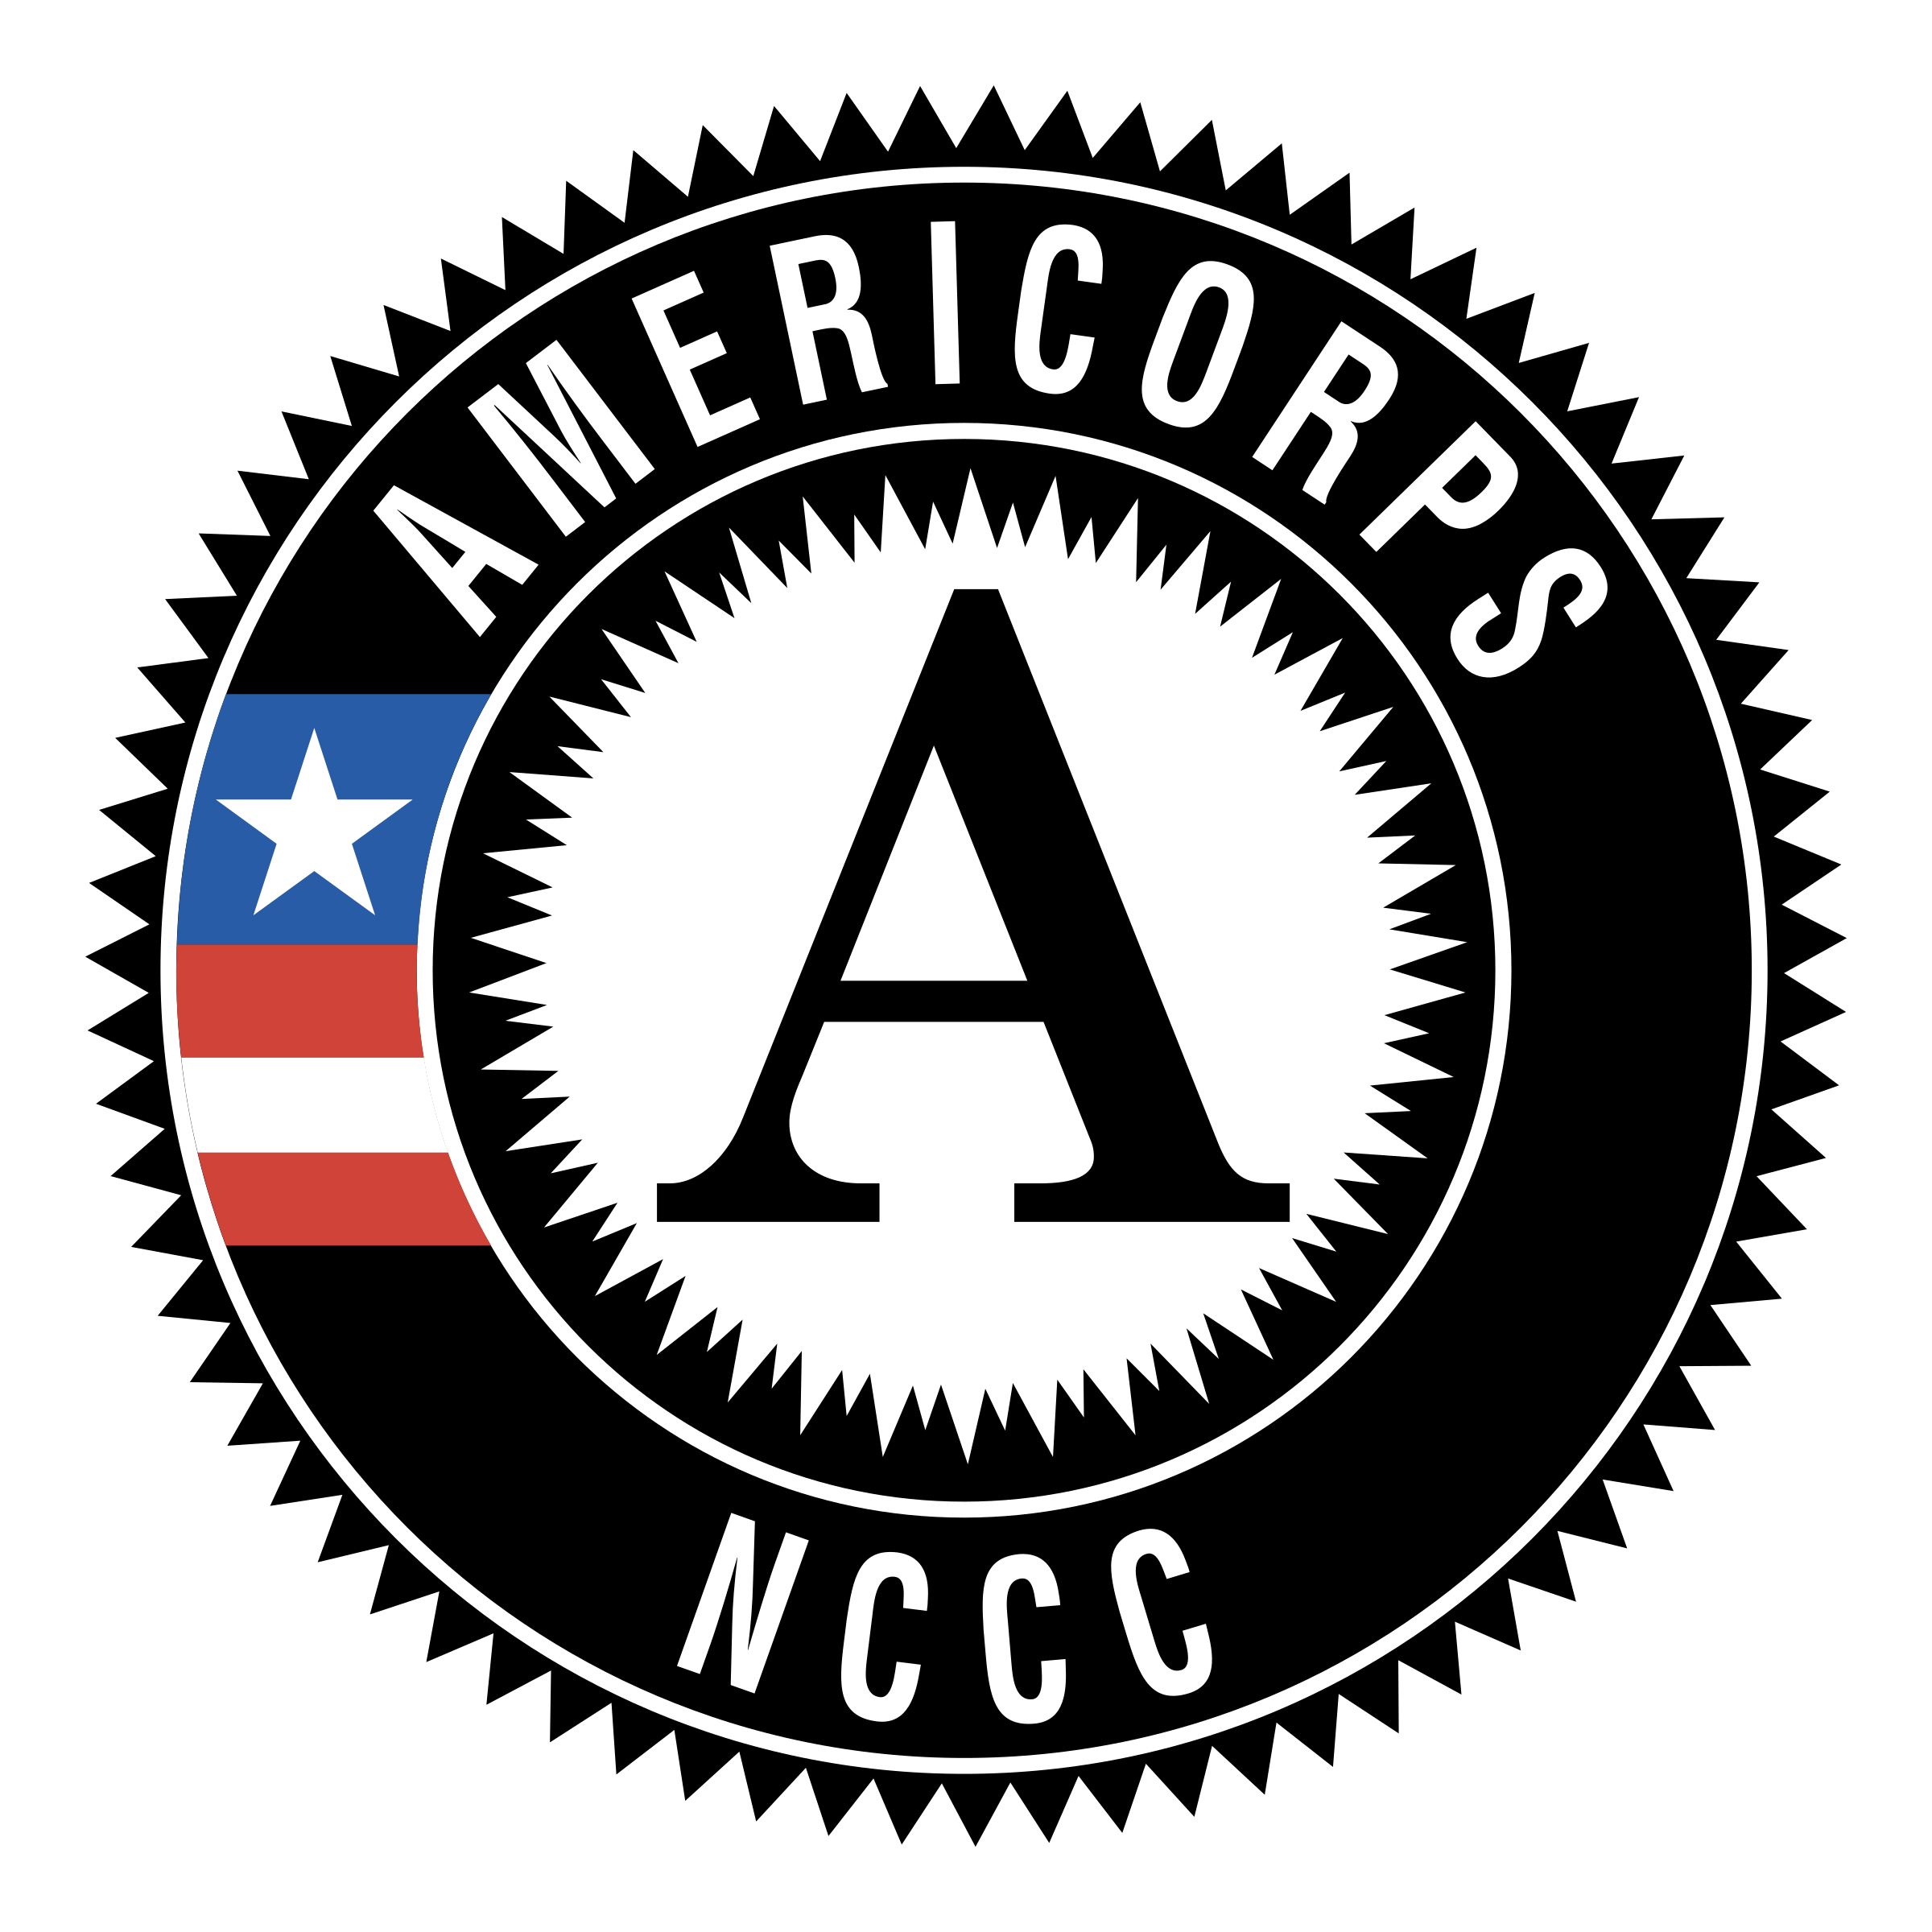 americorps-nccc-01-logo-png-transparent.png